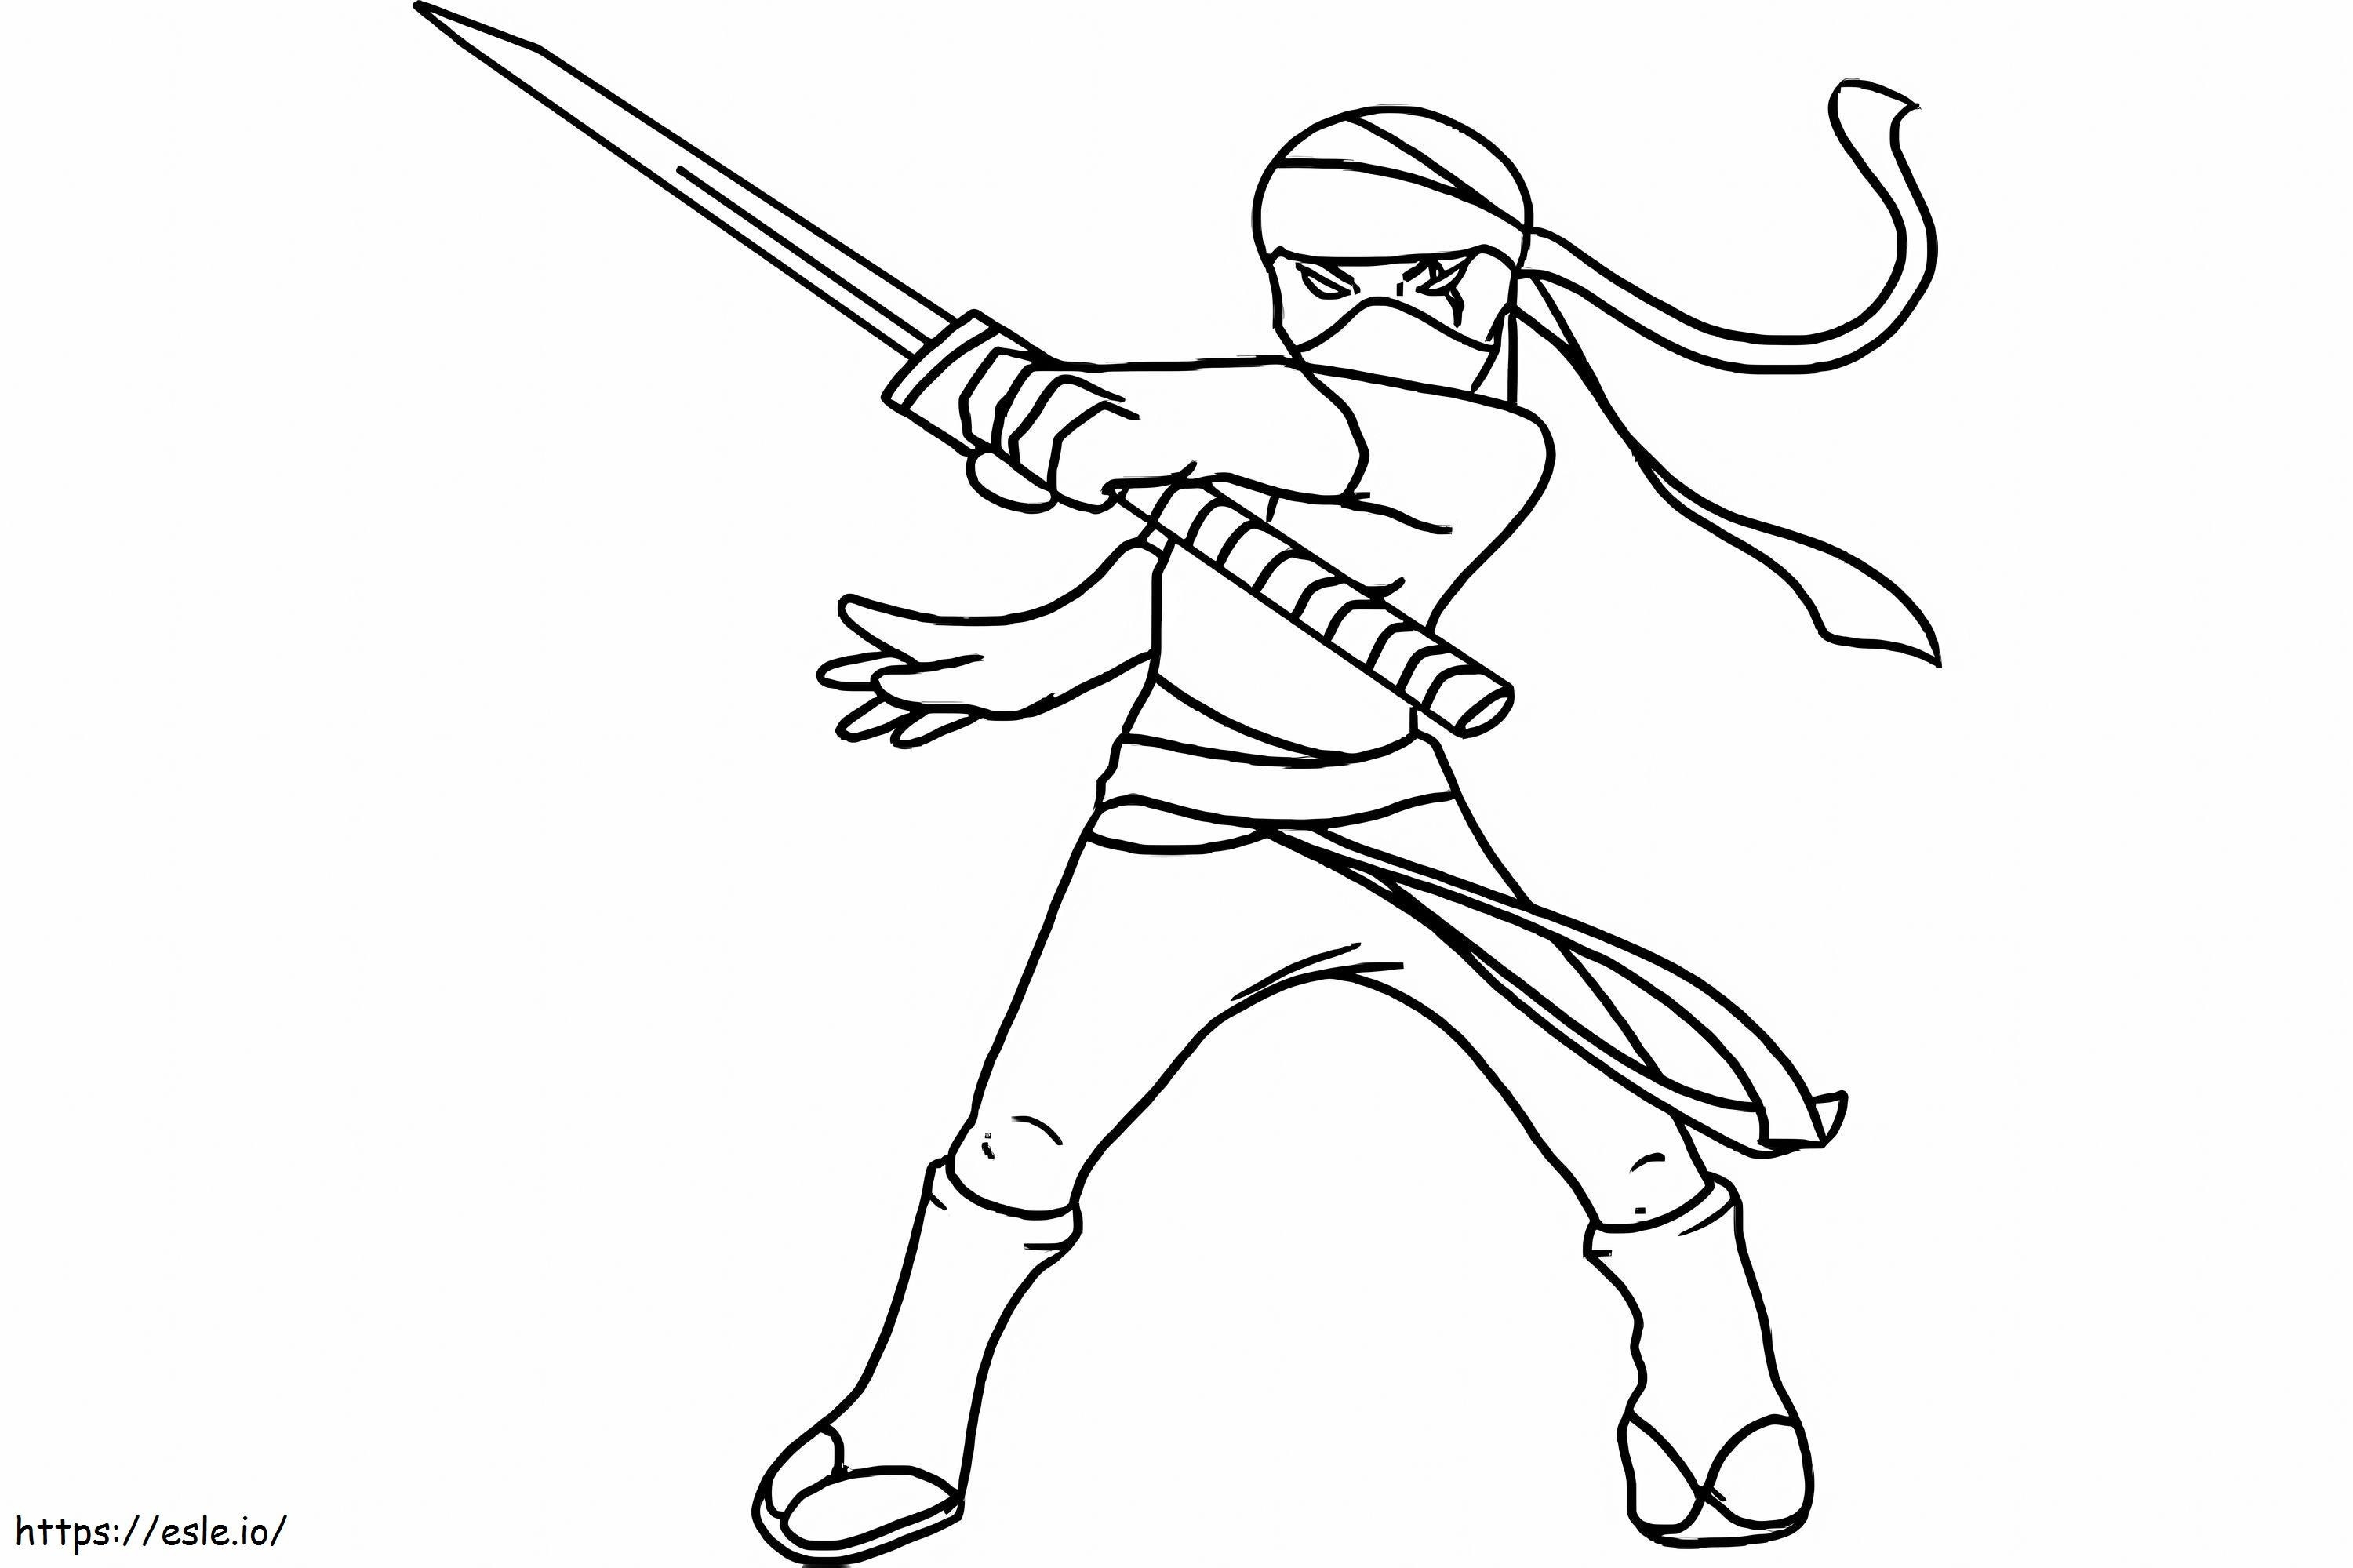 Coloriage Ninja 5 à imprimer dessin